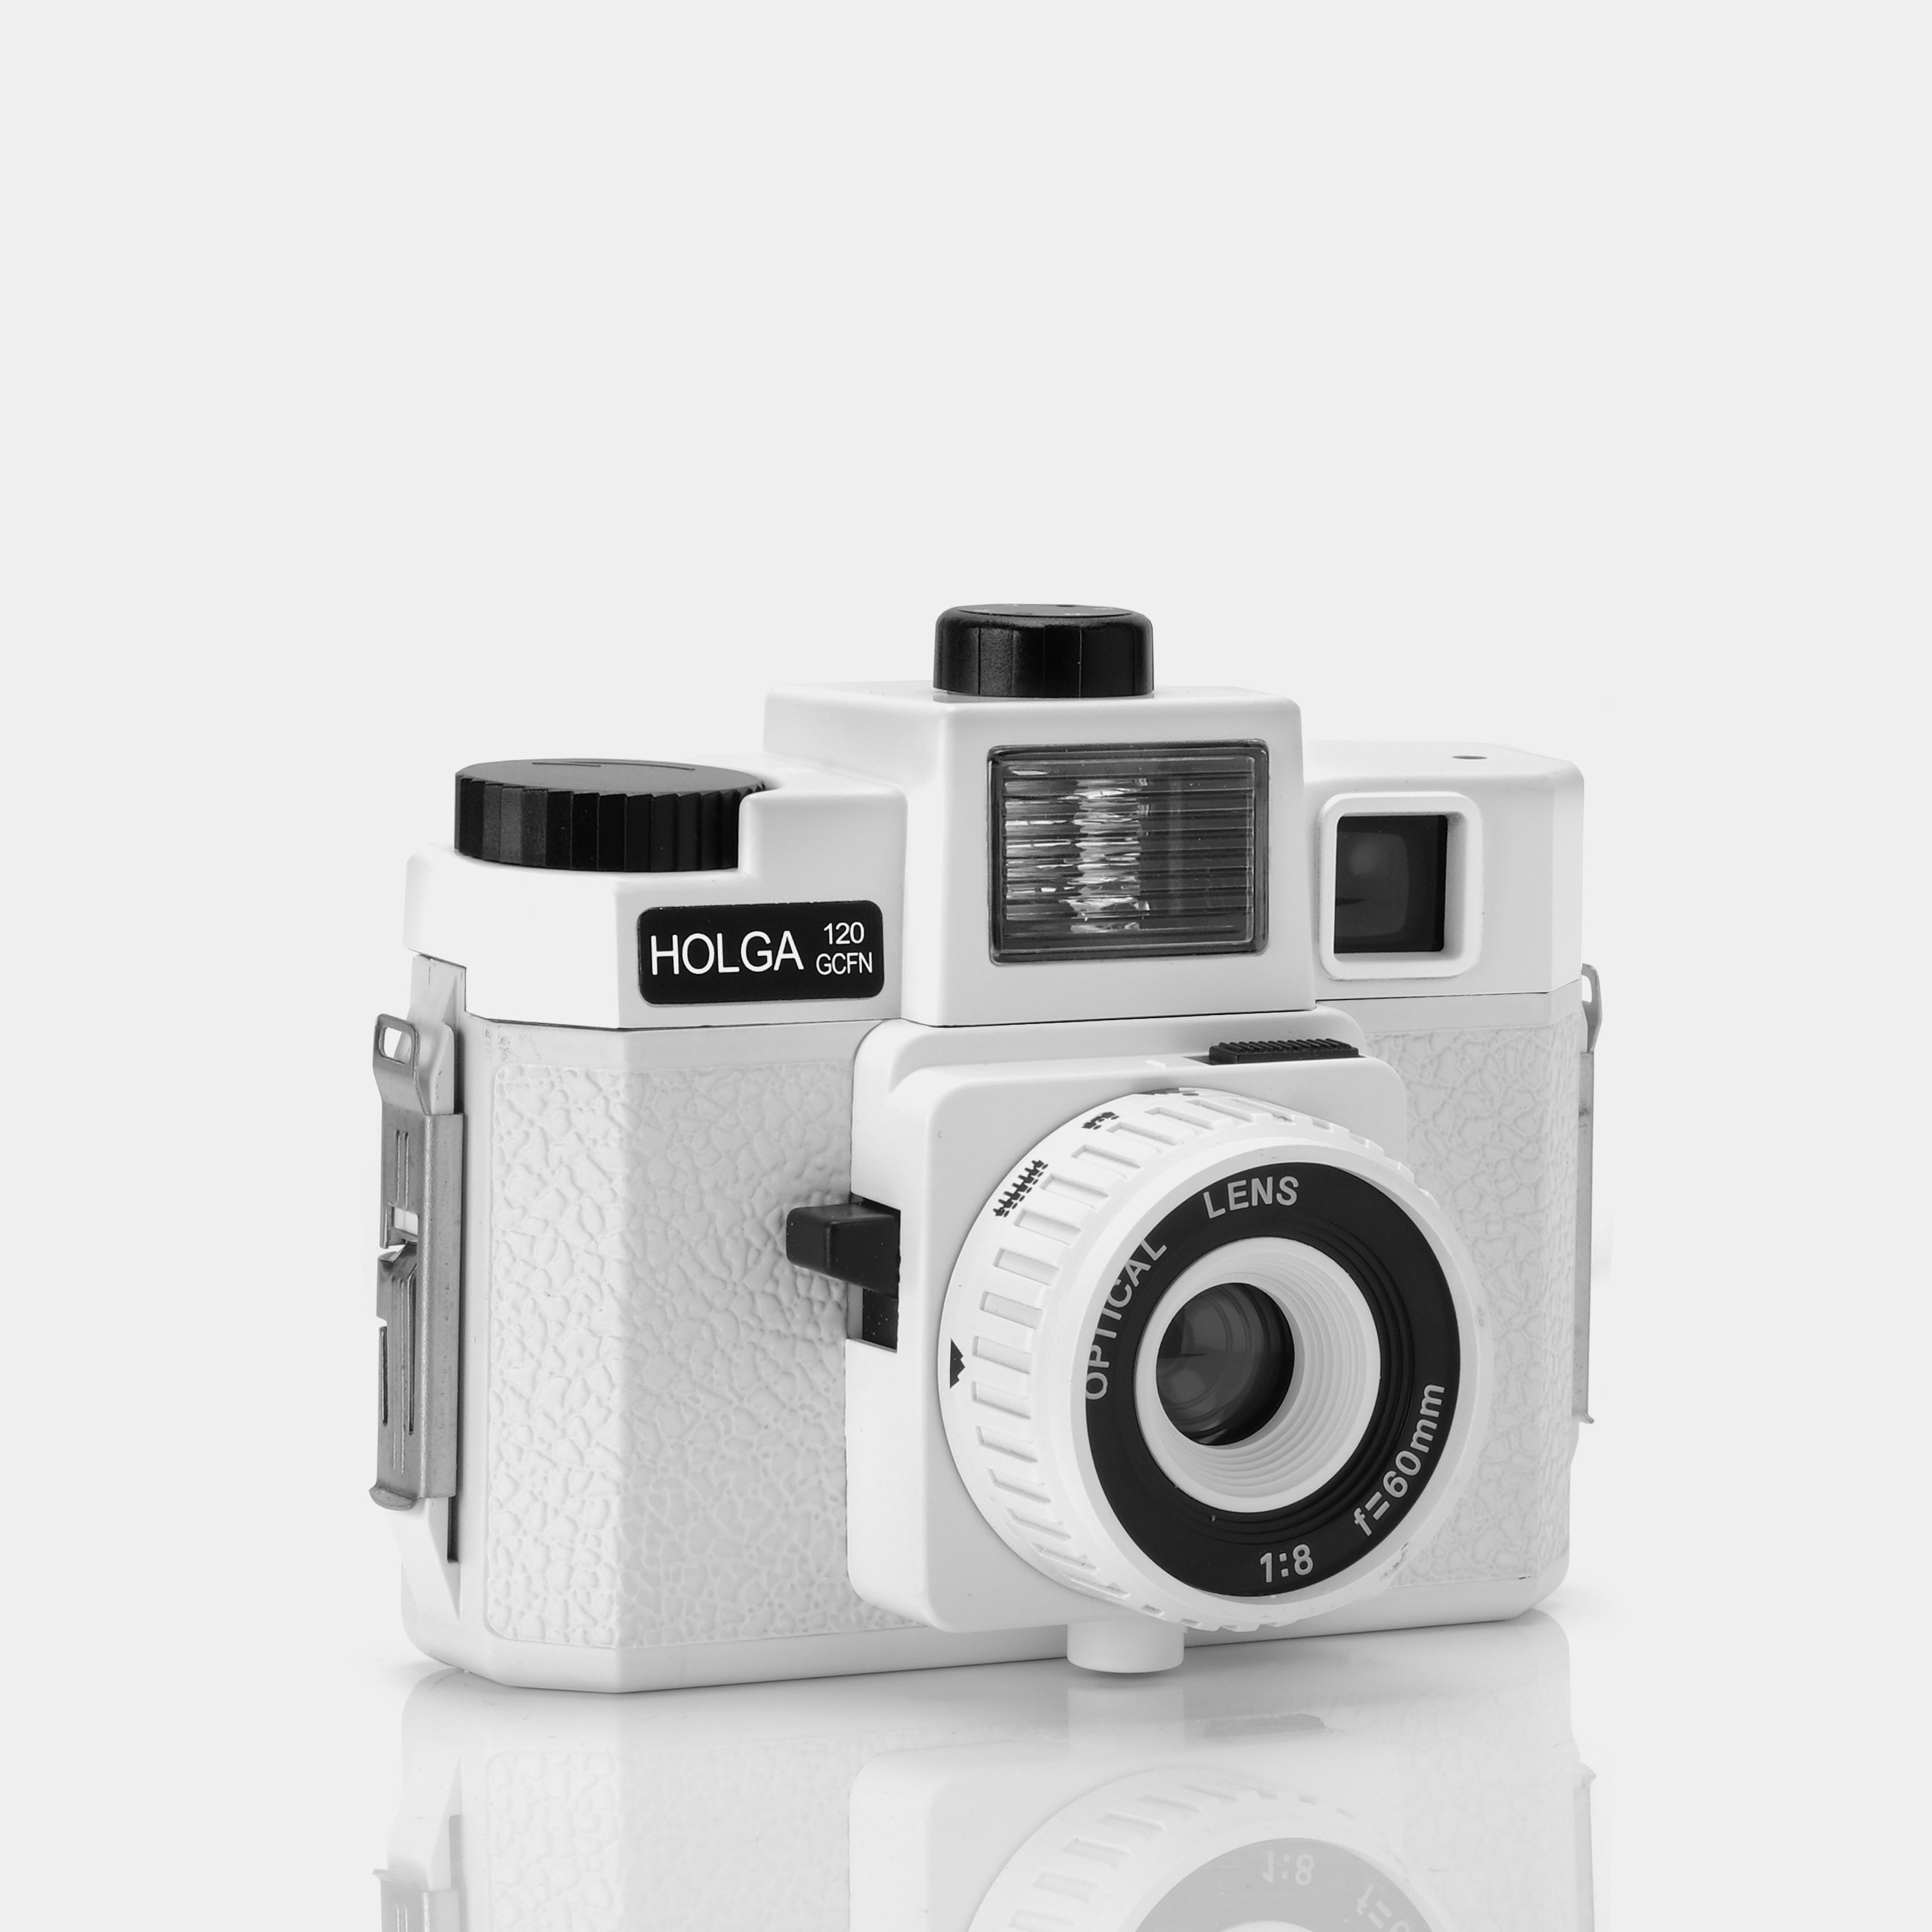 Holga 120 GCFN White 120 Film Camera with Flash